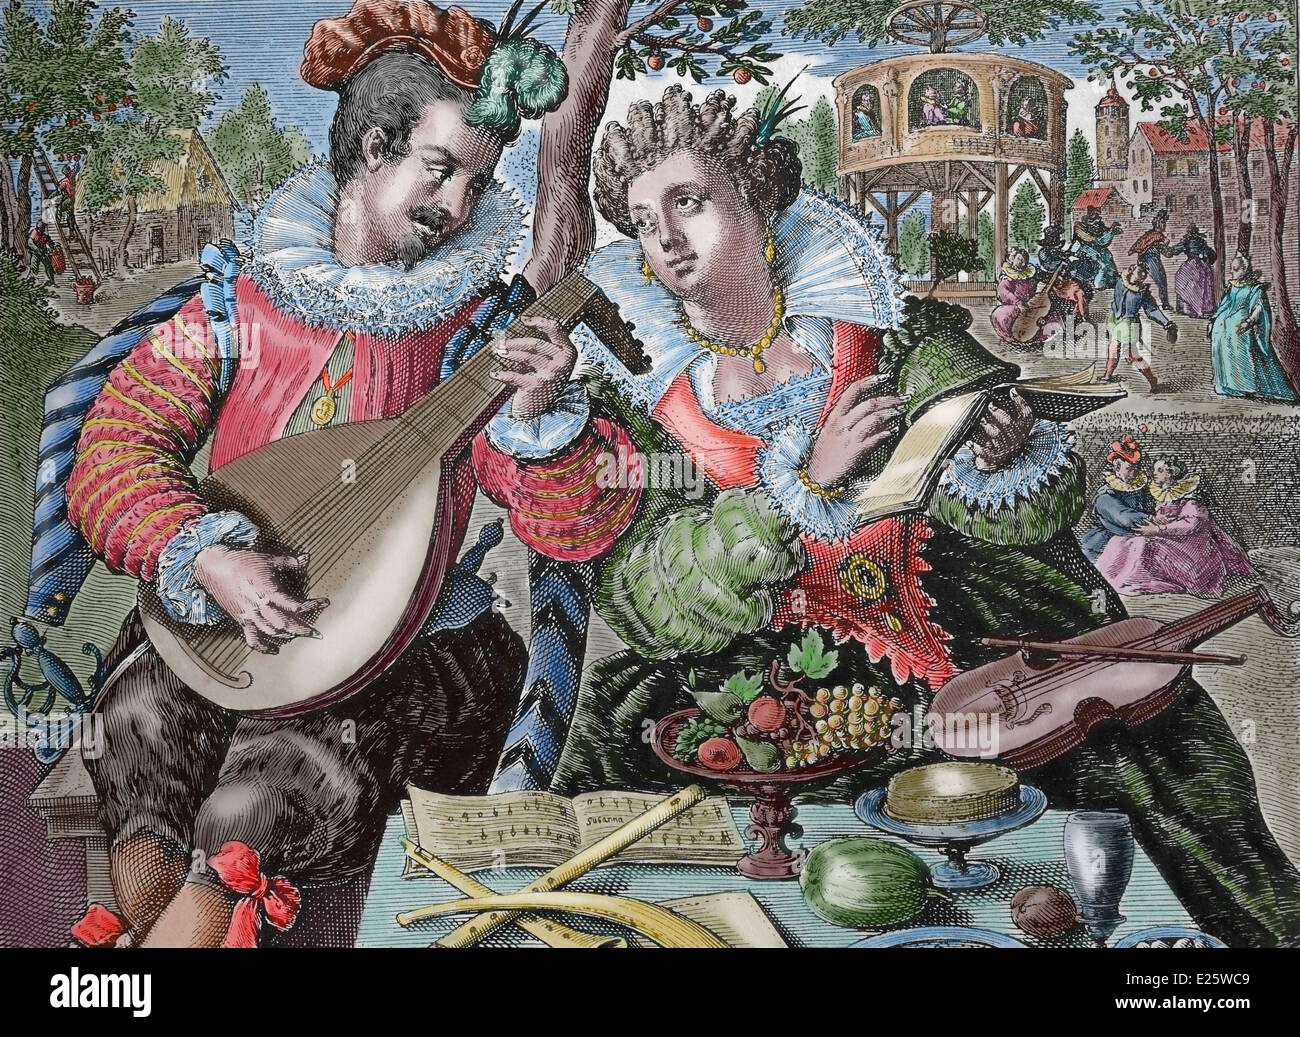 Europa. Renaissance. Musiken. Lautenspieler und Geiger. 16. Jahrhundert. Gravur. Spätere Färbung. Stockfoto